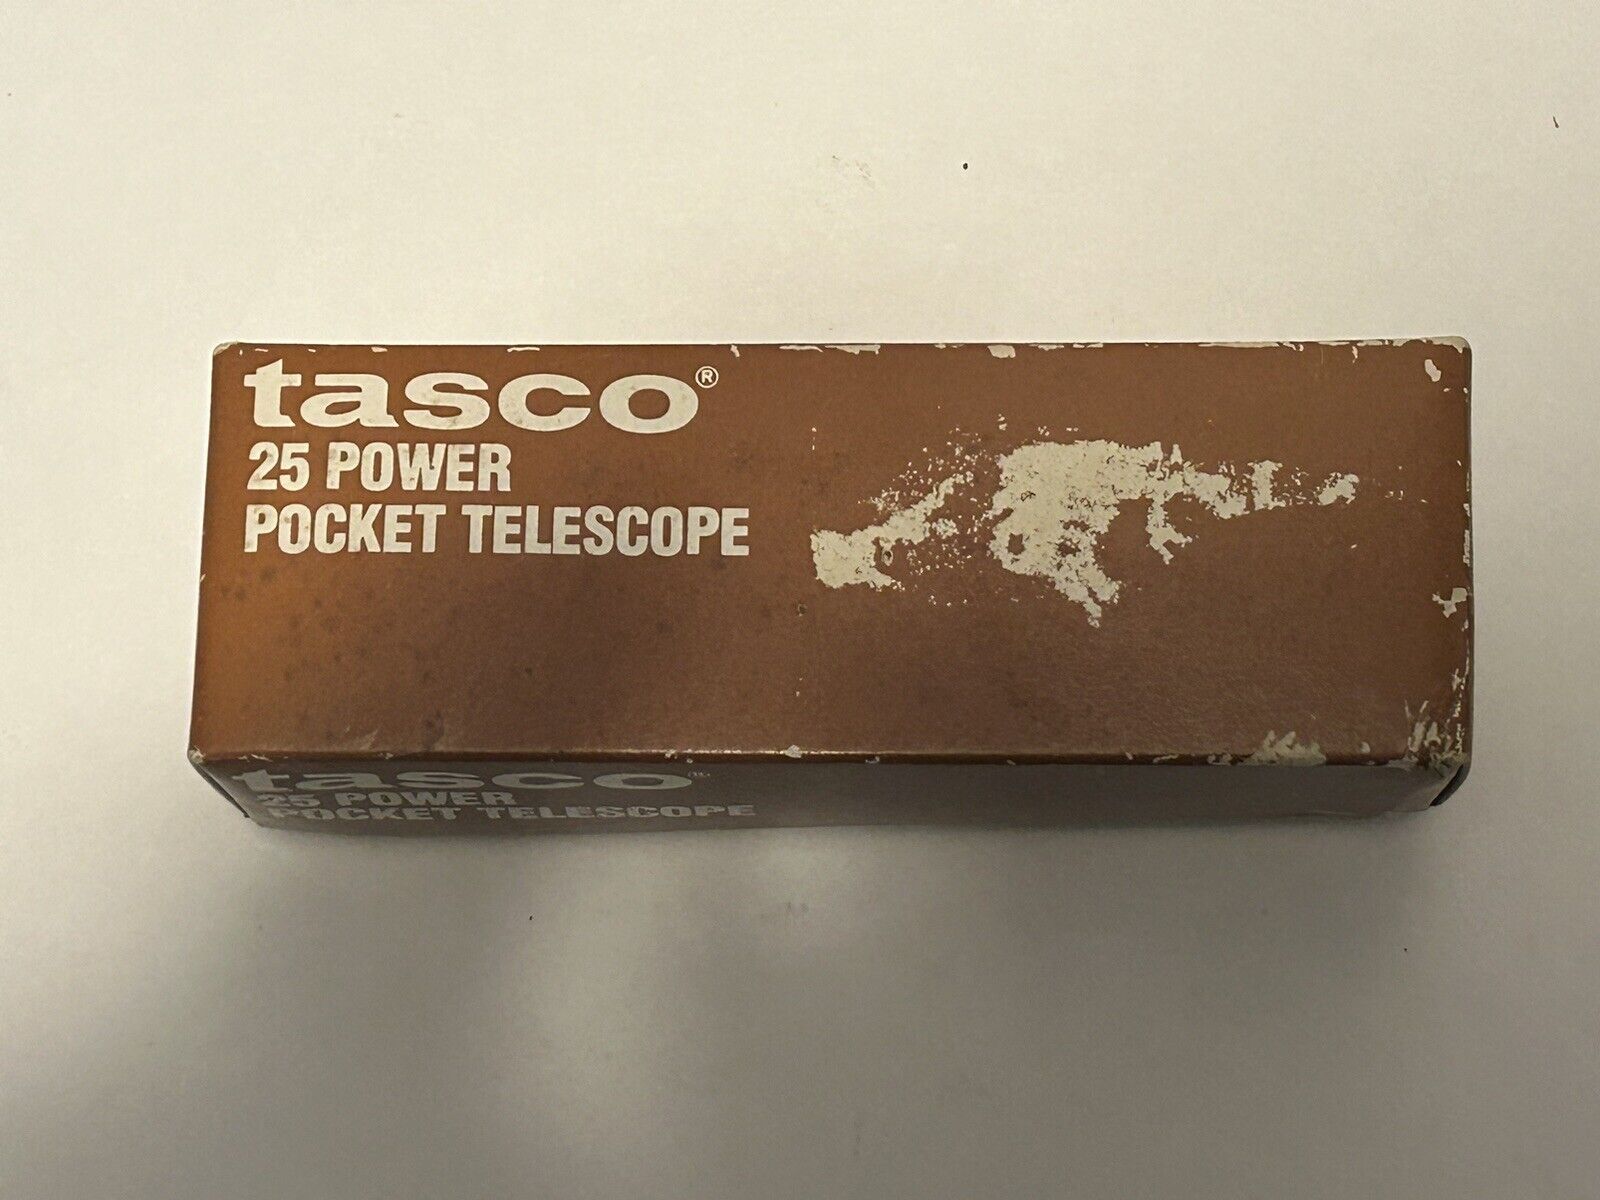 Vintage Tasco Pocket Telescope 25 Power Model 1AG 25X30mm-Case and Box Included